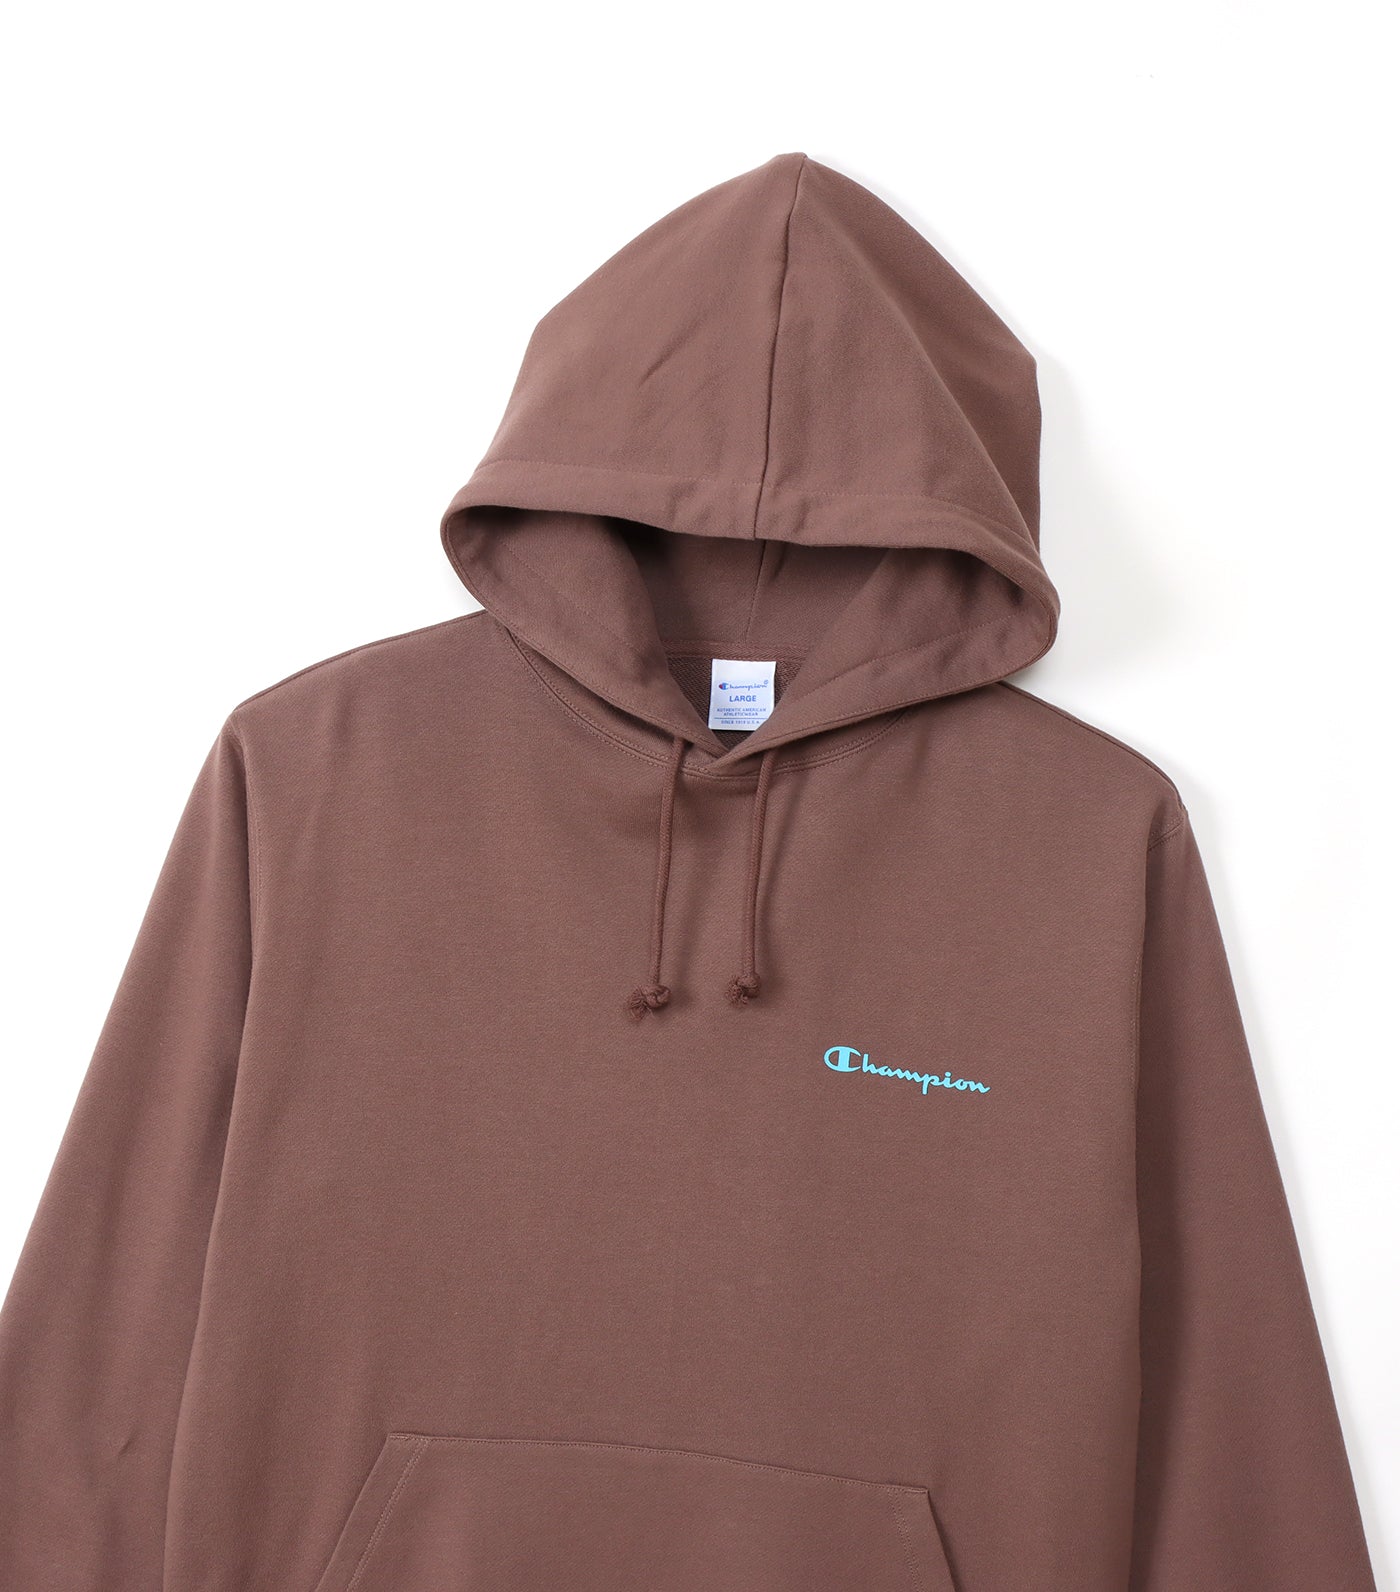 Japan Line Hooded Sweatshirt Mocha